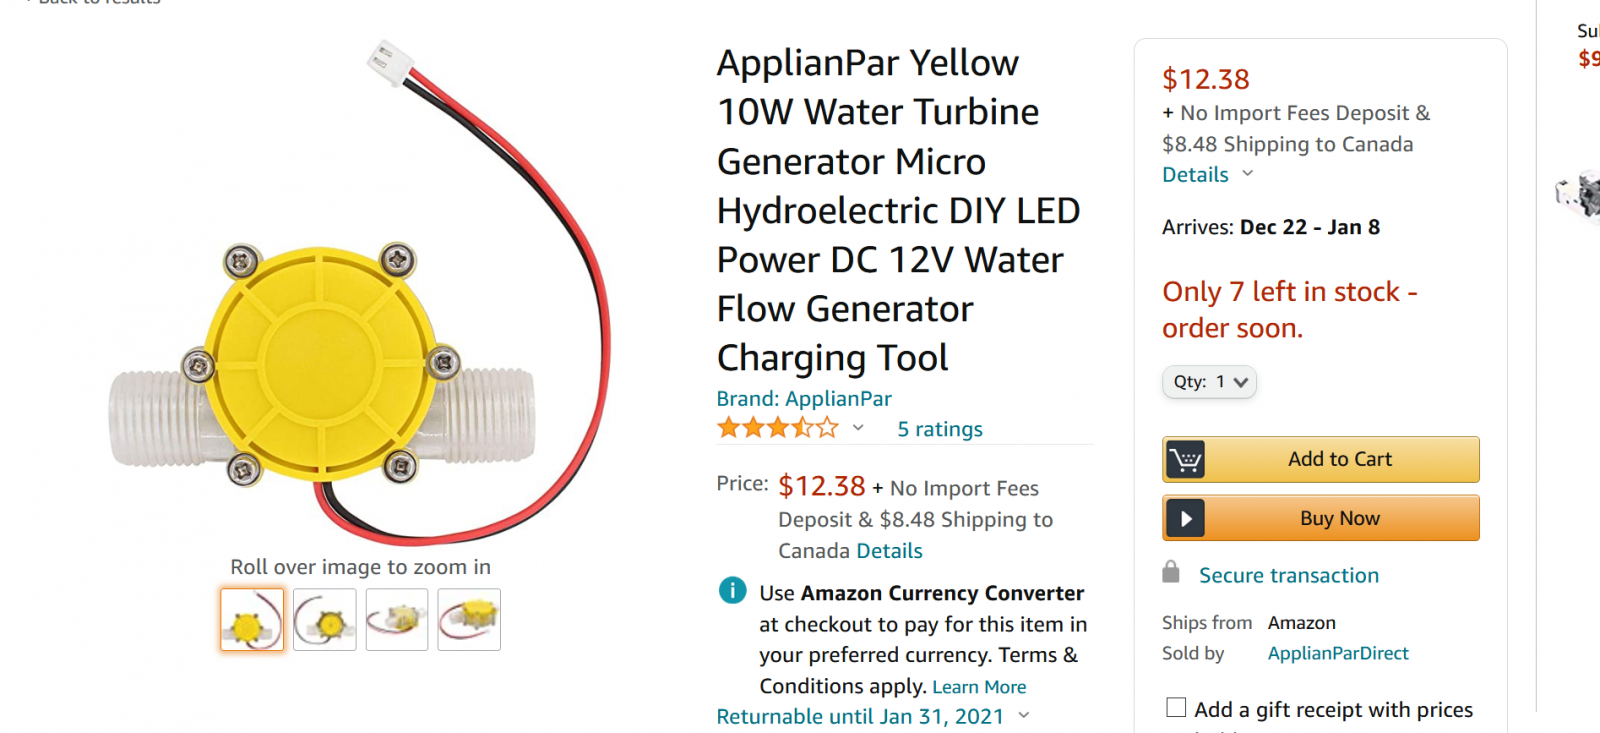 Screenshot_2020-12-10 Amazon com ApplianPar Yellow 10W Water Turbine Generator Micro Hydroelec...png